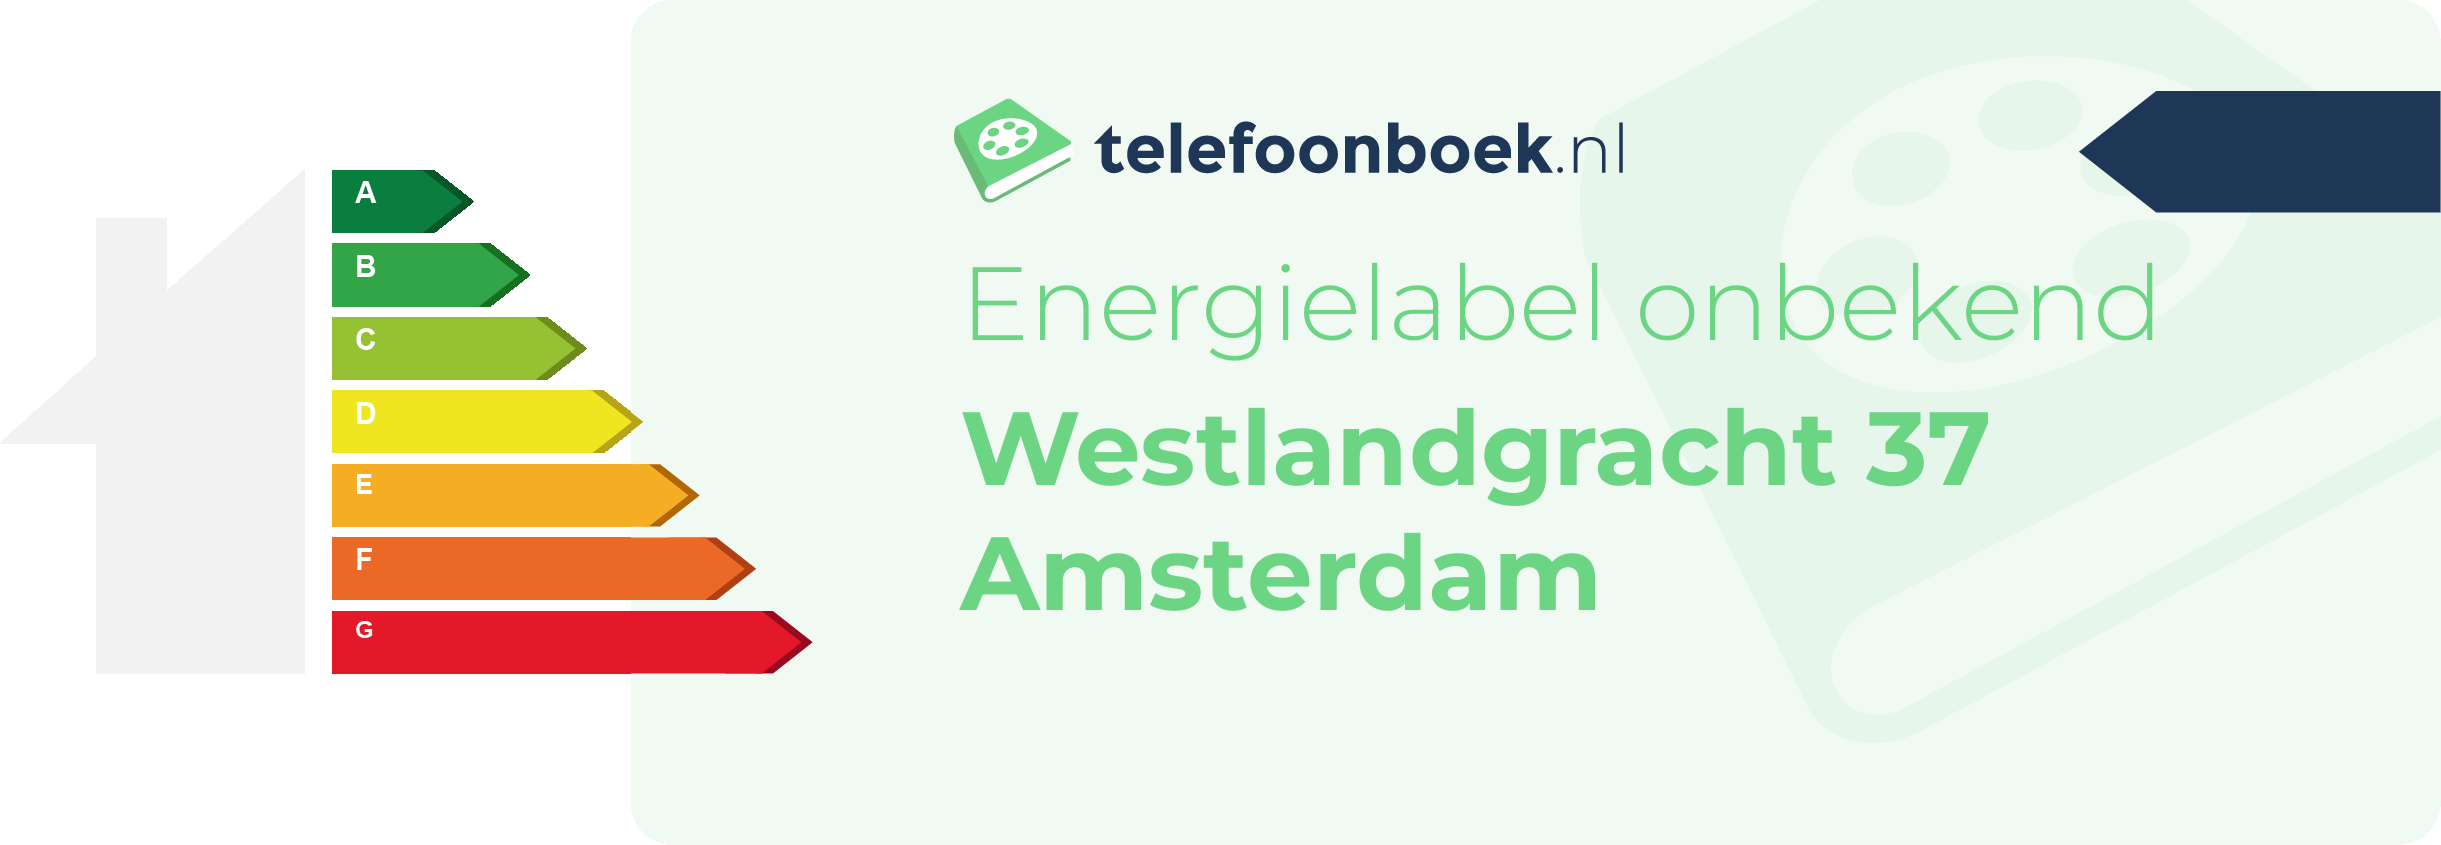 Energielabel Westlandgracht 37 Amsterdam